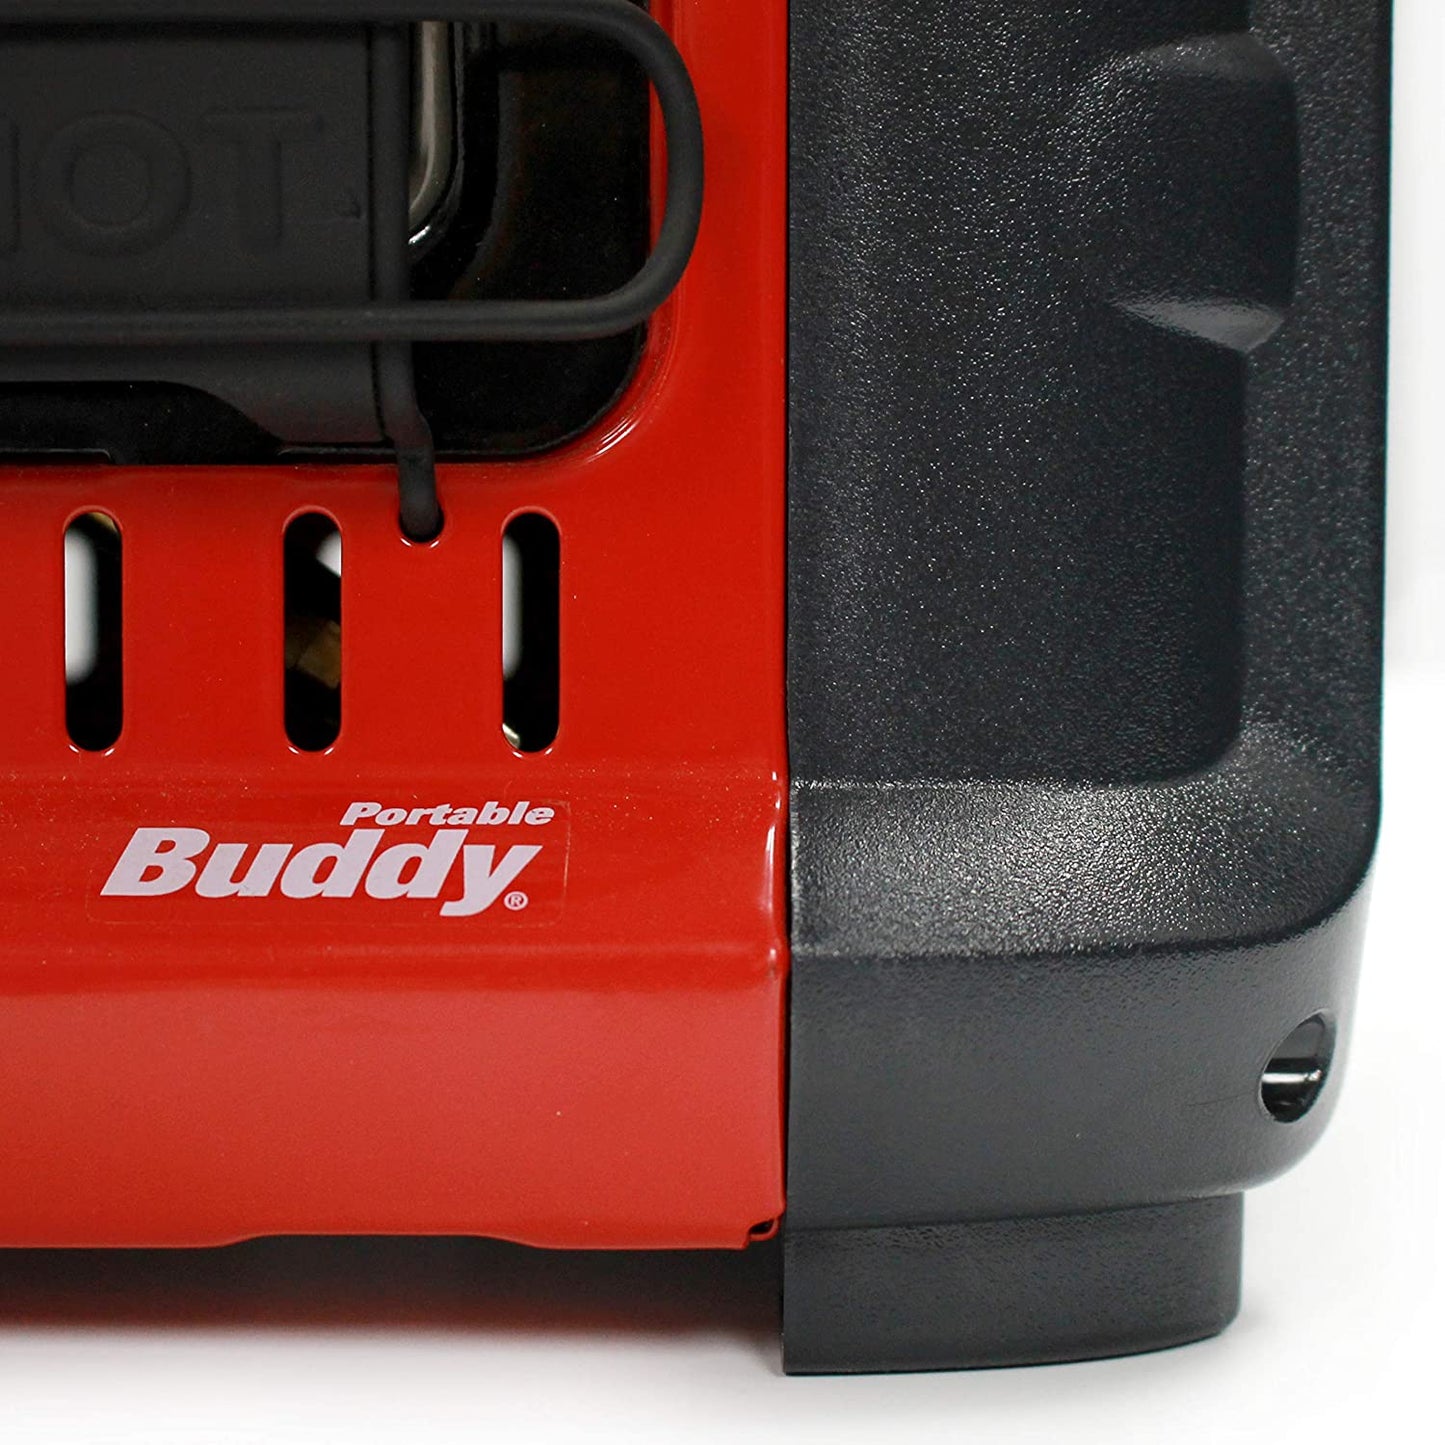 F232000 MH9BX Buddy 4,000-9,000-BTU Indoor-Safe Portable Propane Radiant Heater, Red-Black